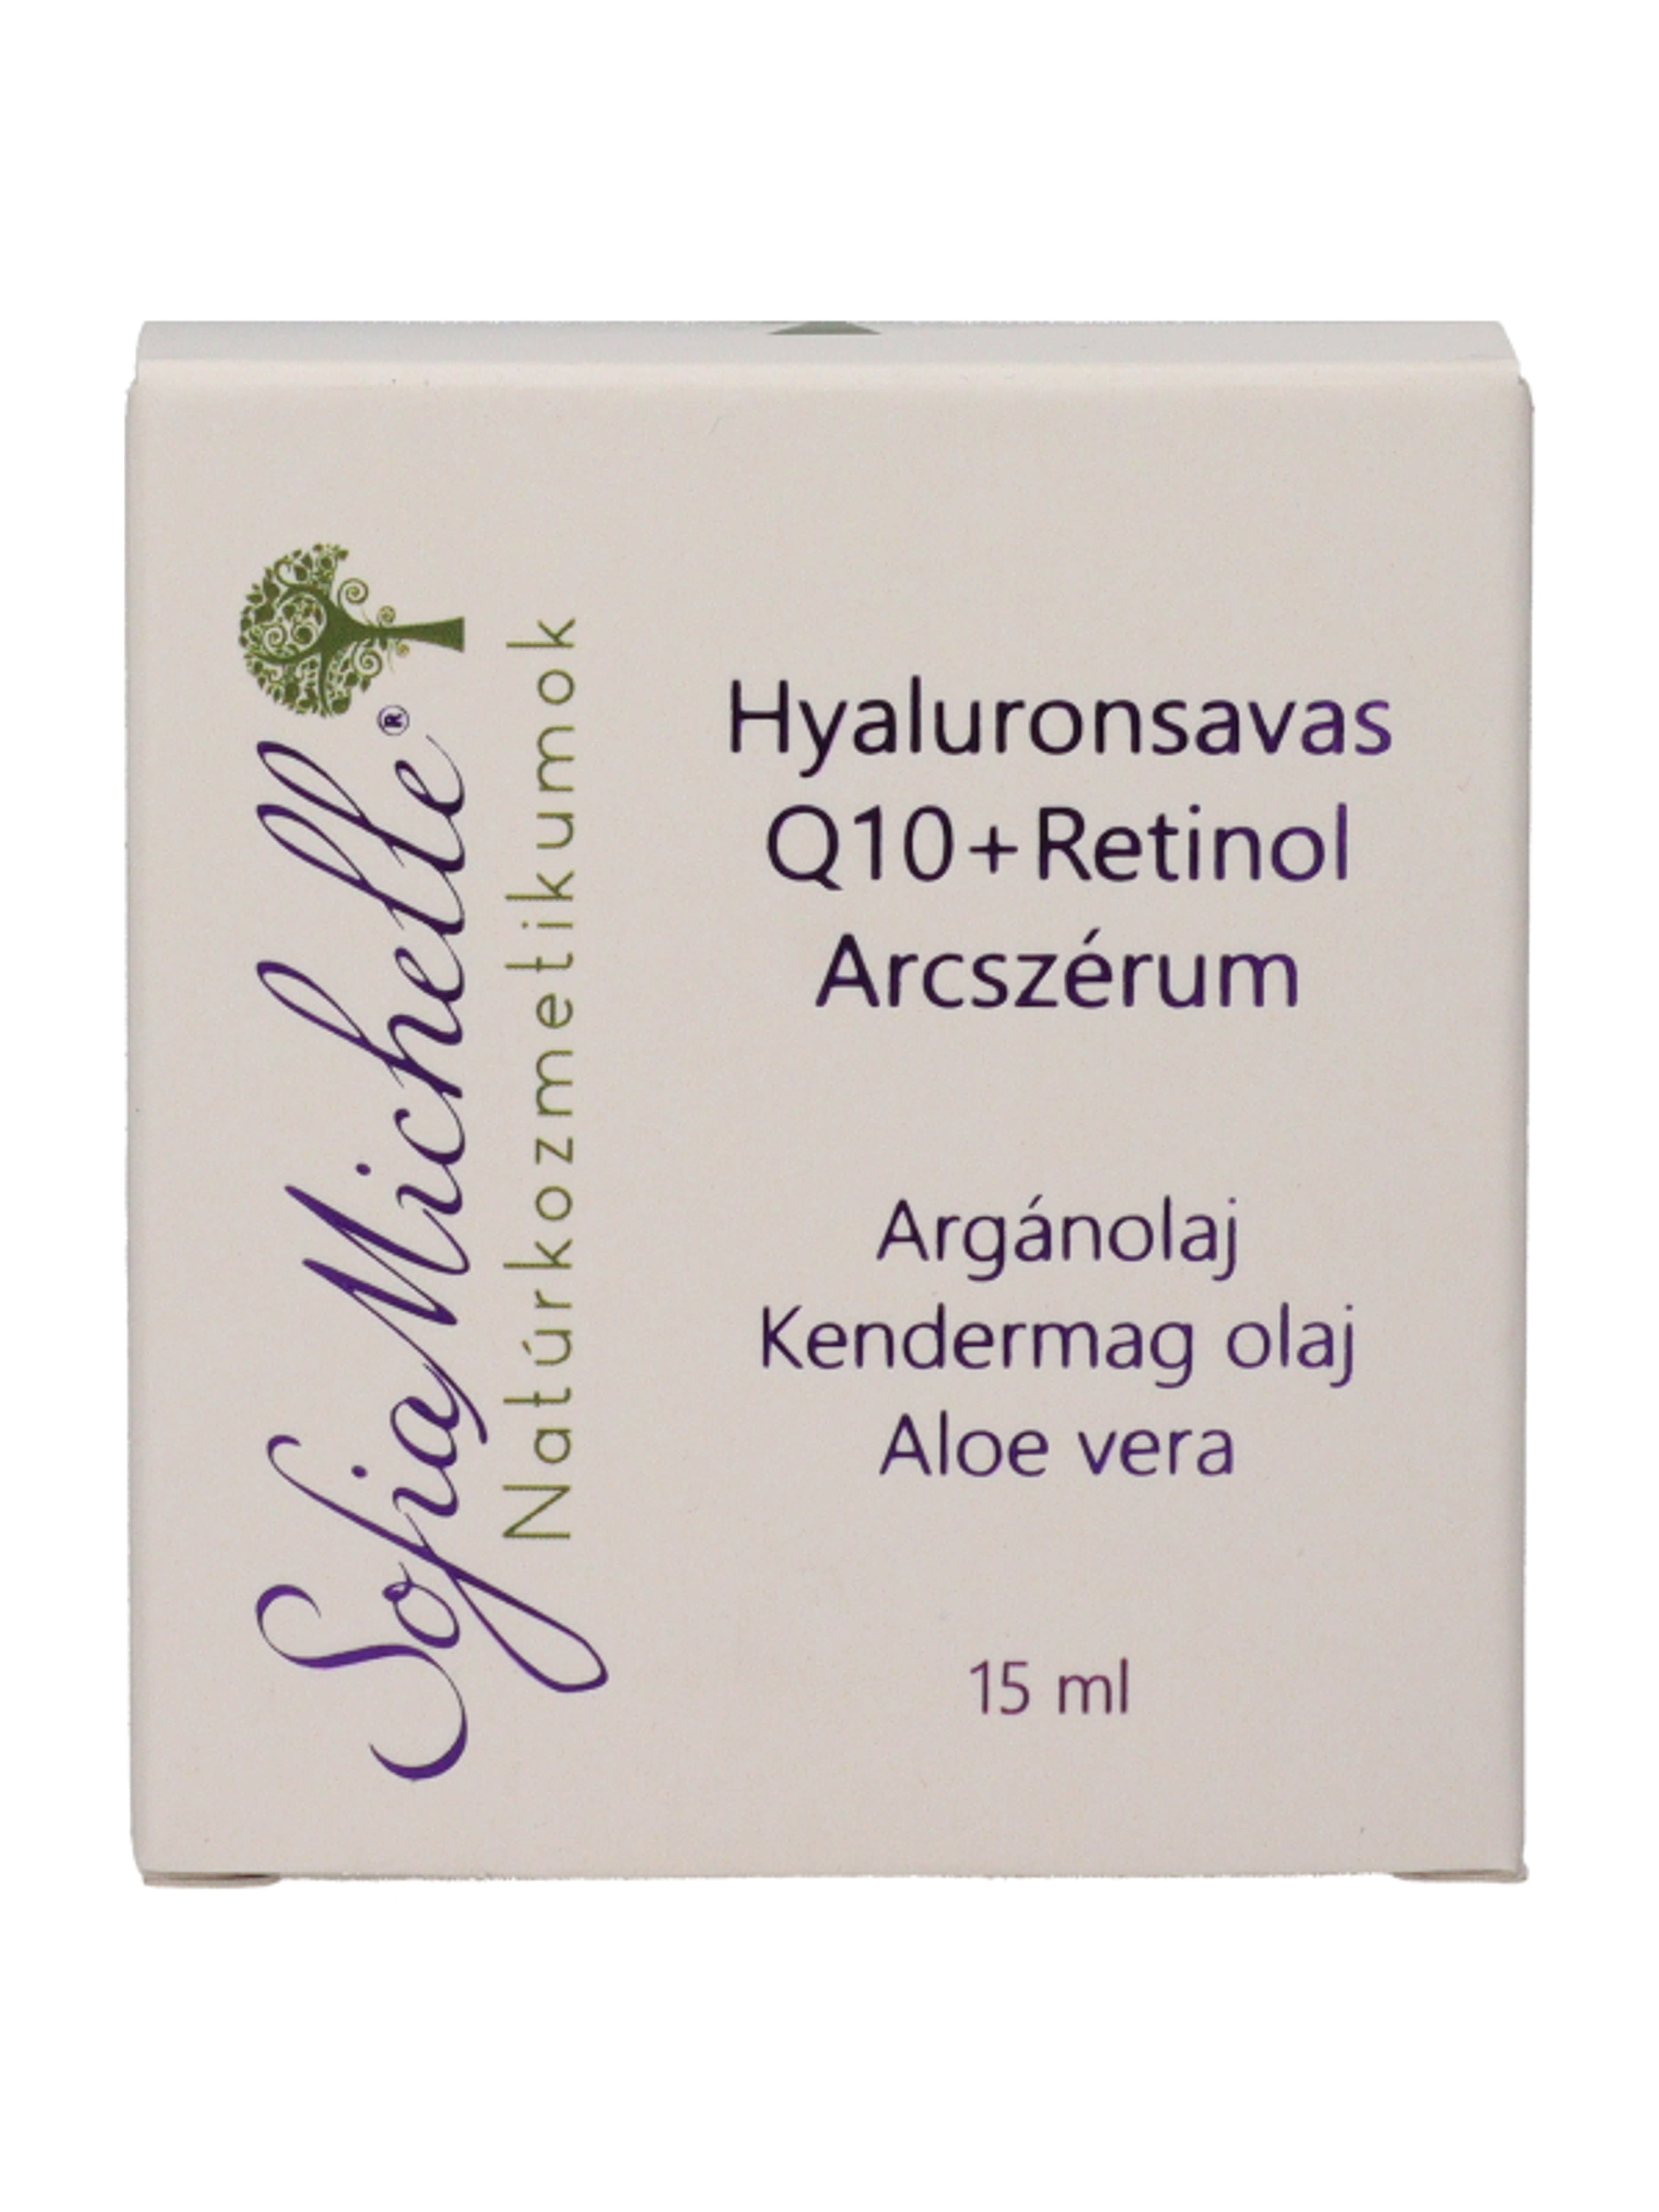 Sofia Michelle Hyaluronsavas Q10+Retinol arcszérum - 15 ml